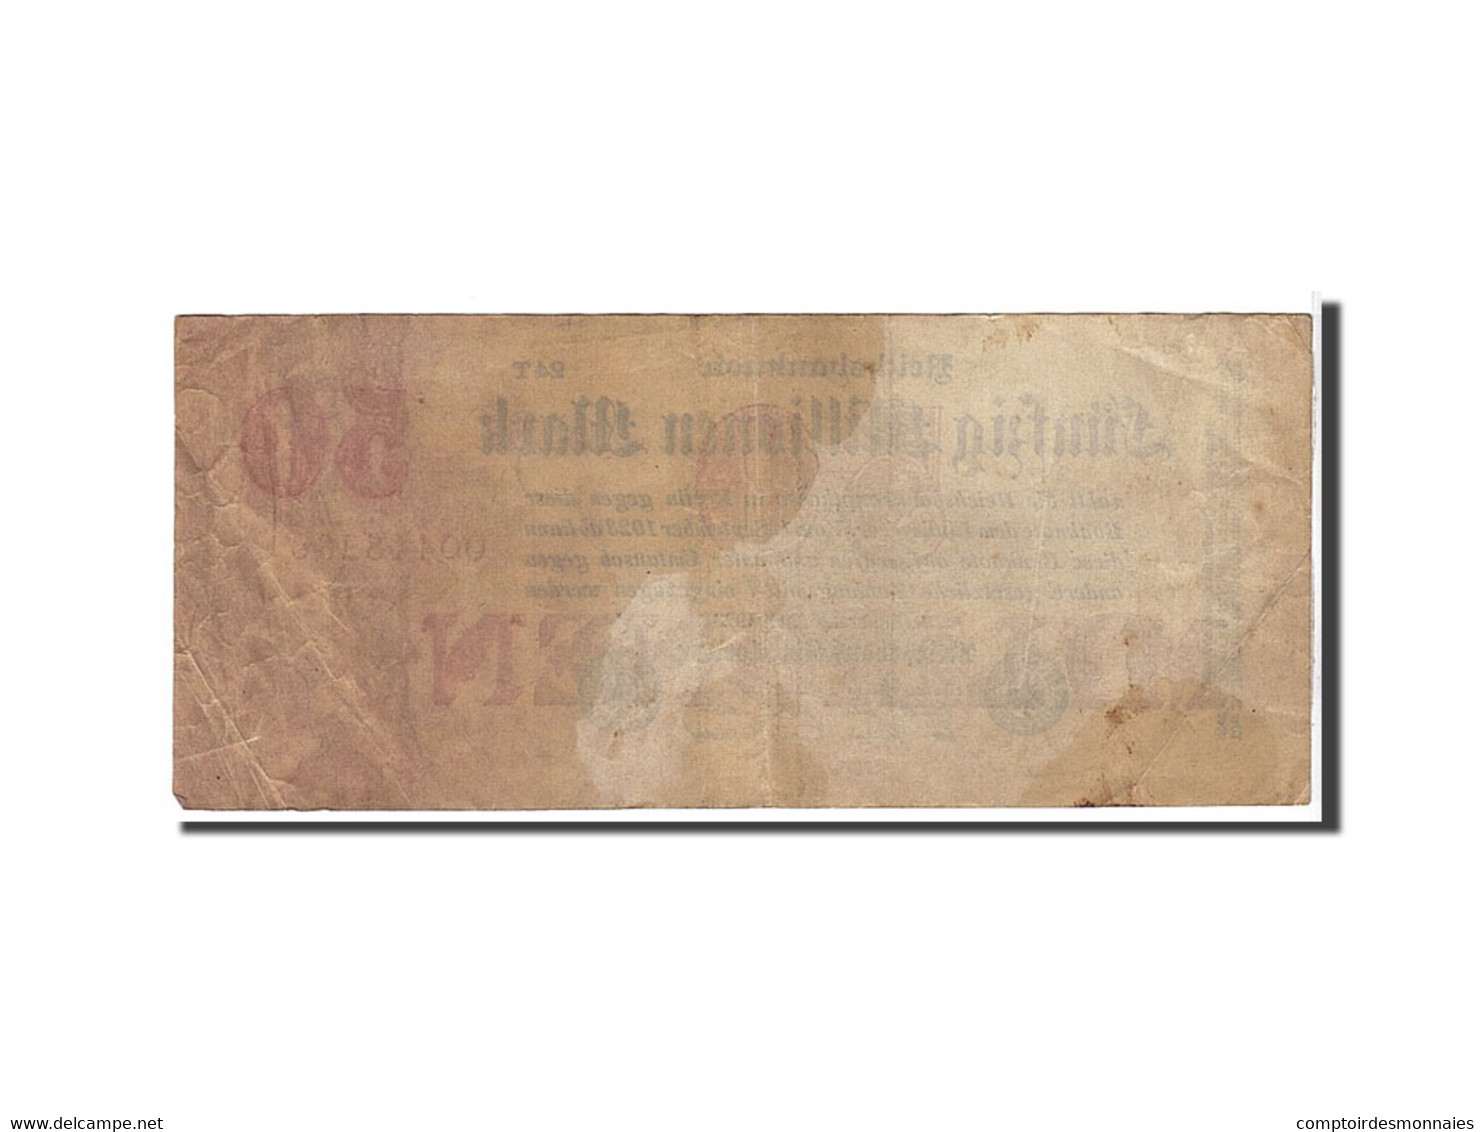 Billet, Allemagne, 50 Millionen Mark, 1923, TB+ - 50 Mark